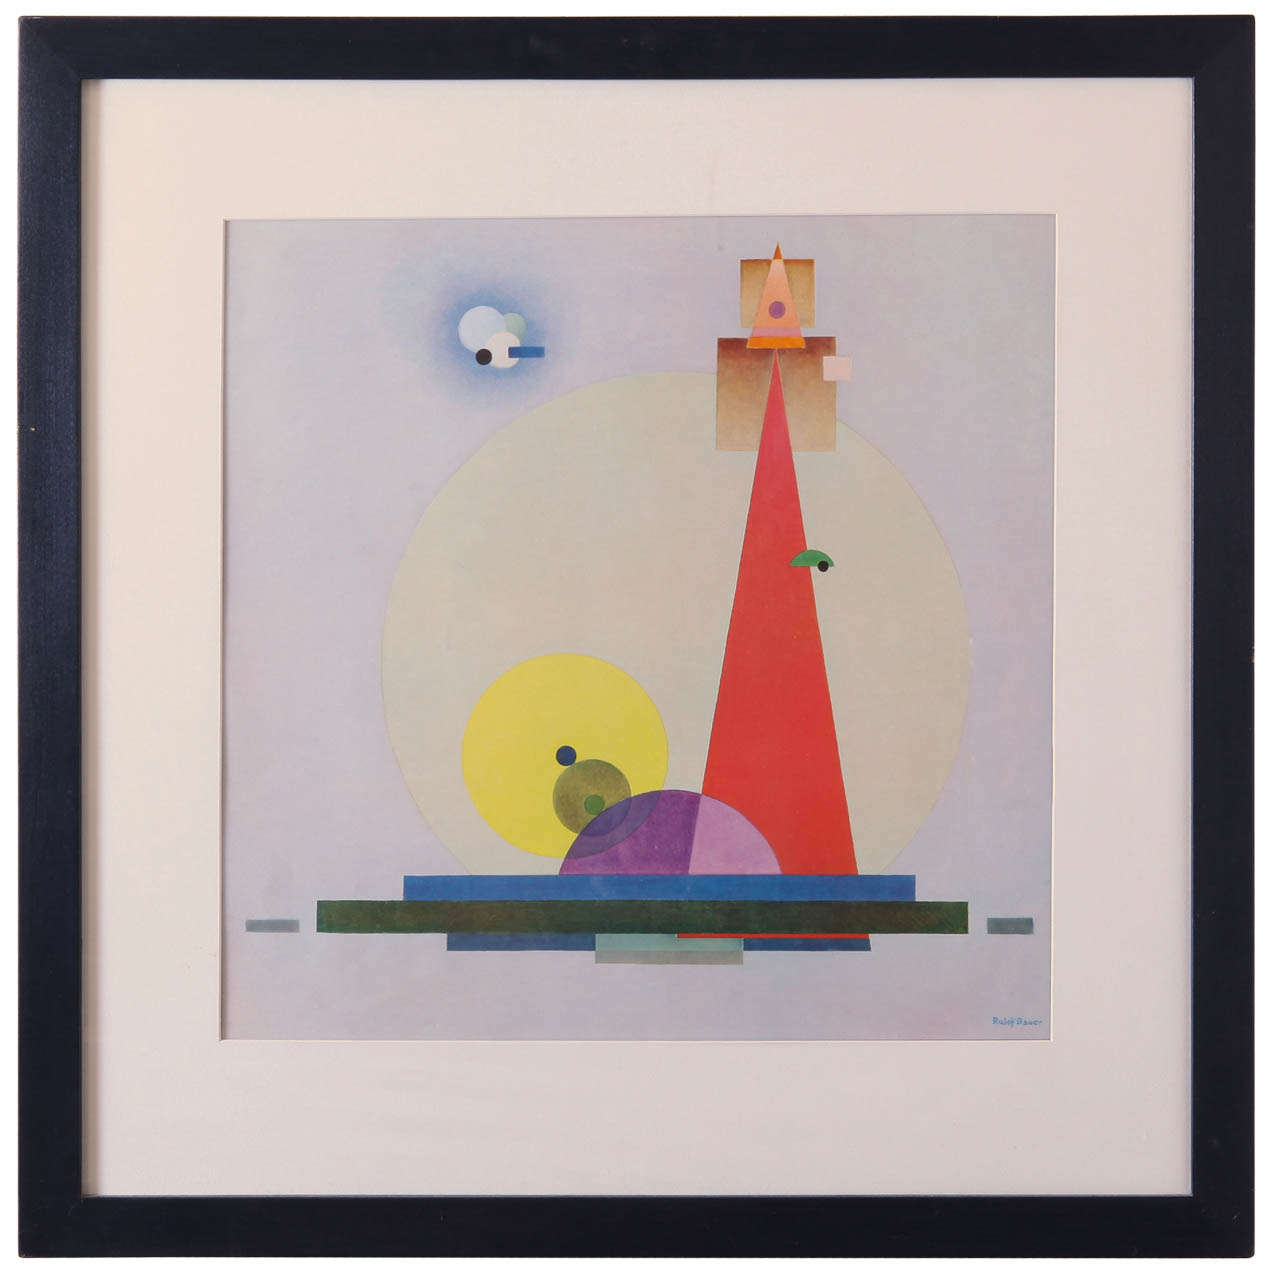 Rudolf Bauer, "The Holy One" Color Litho Guggenheim Print